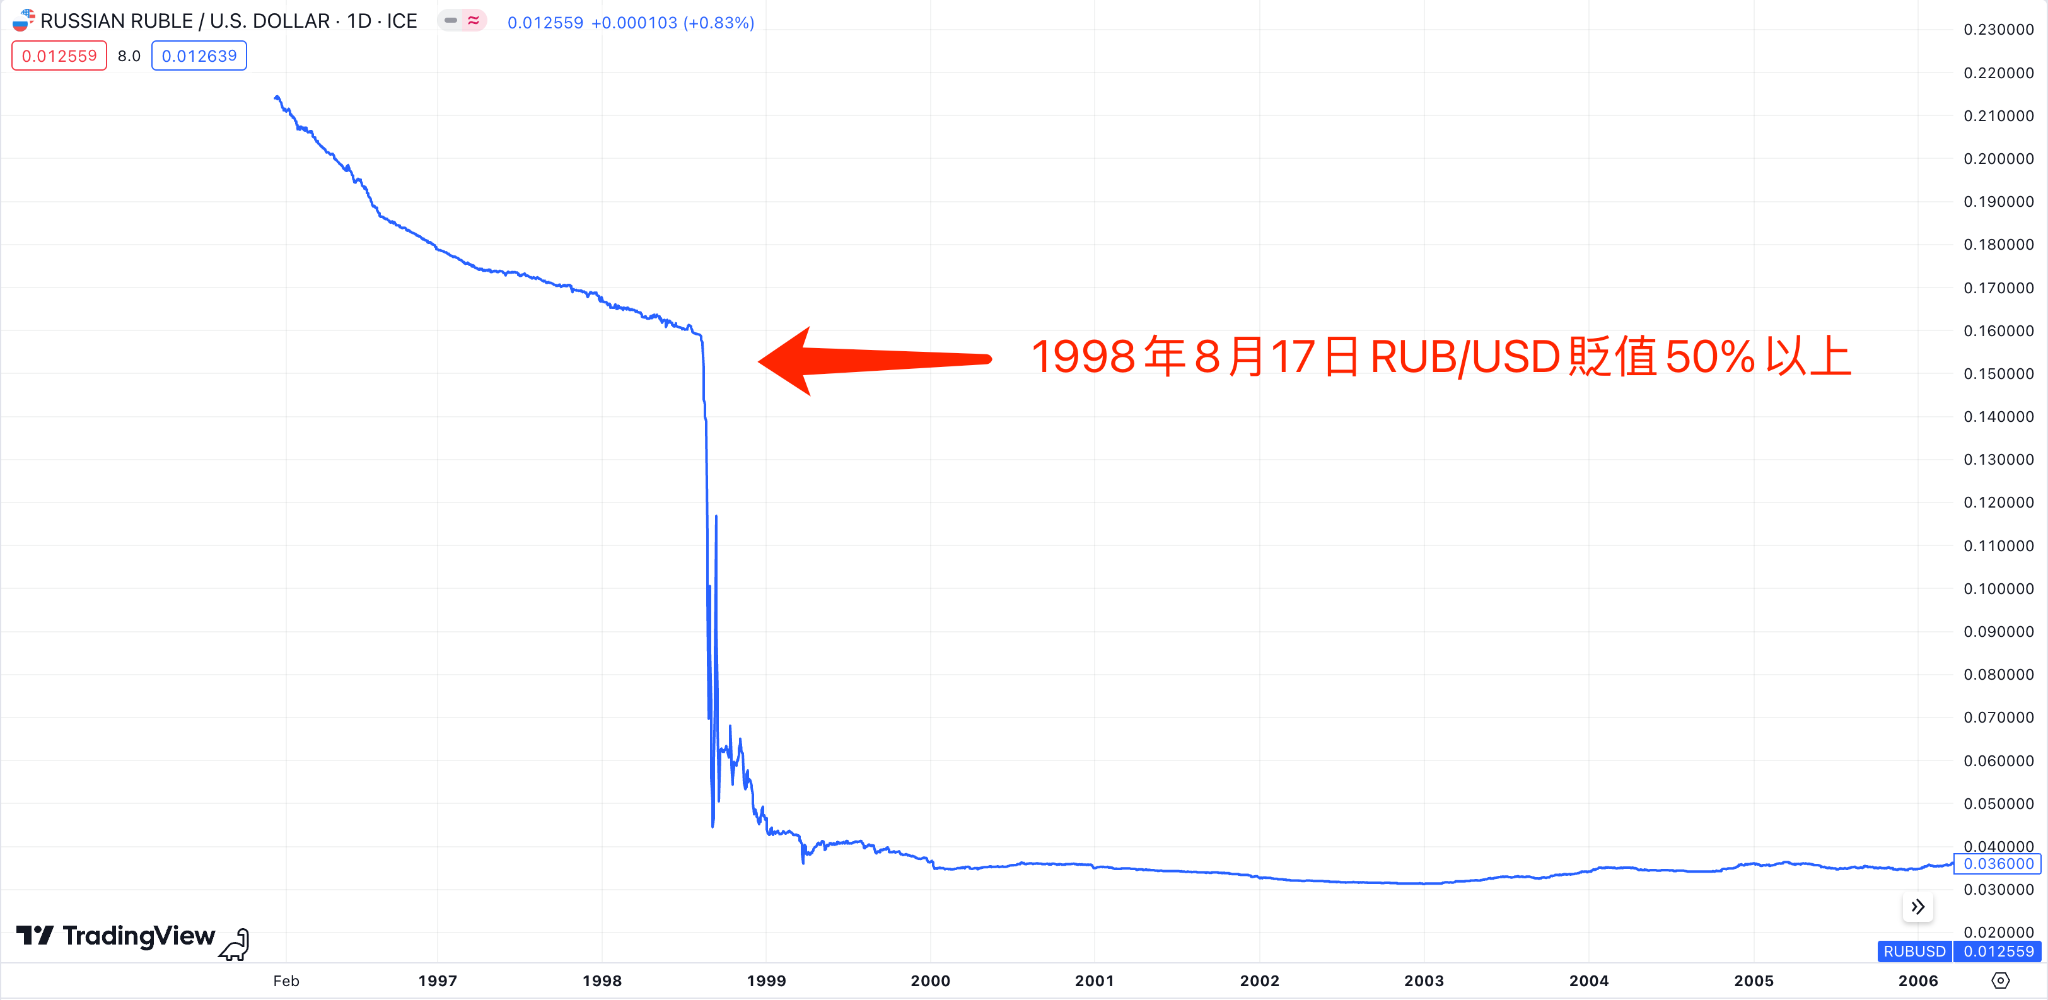  RUB/USD在亞洲金融風暴時期的走勢